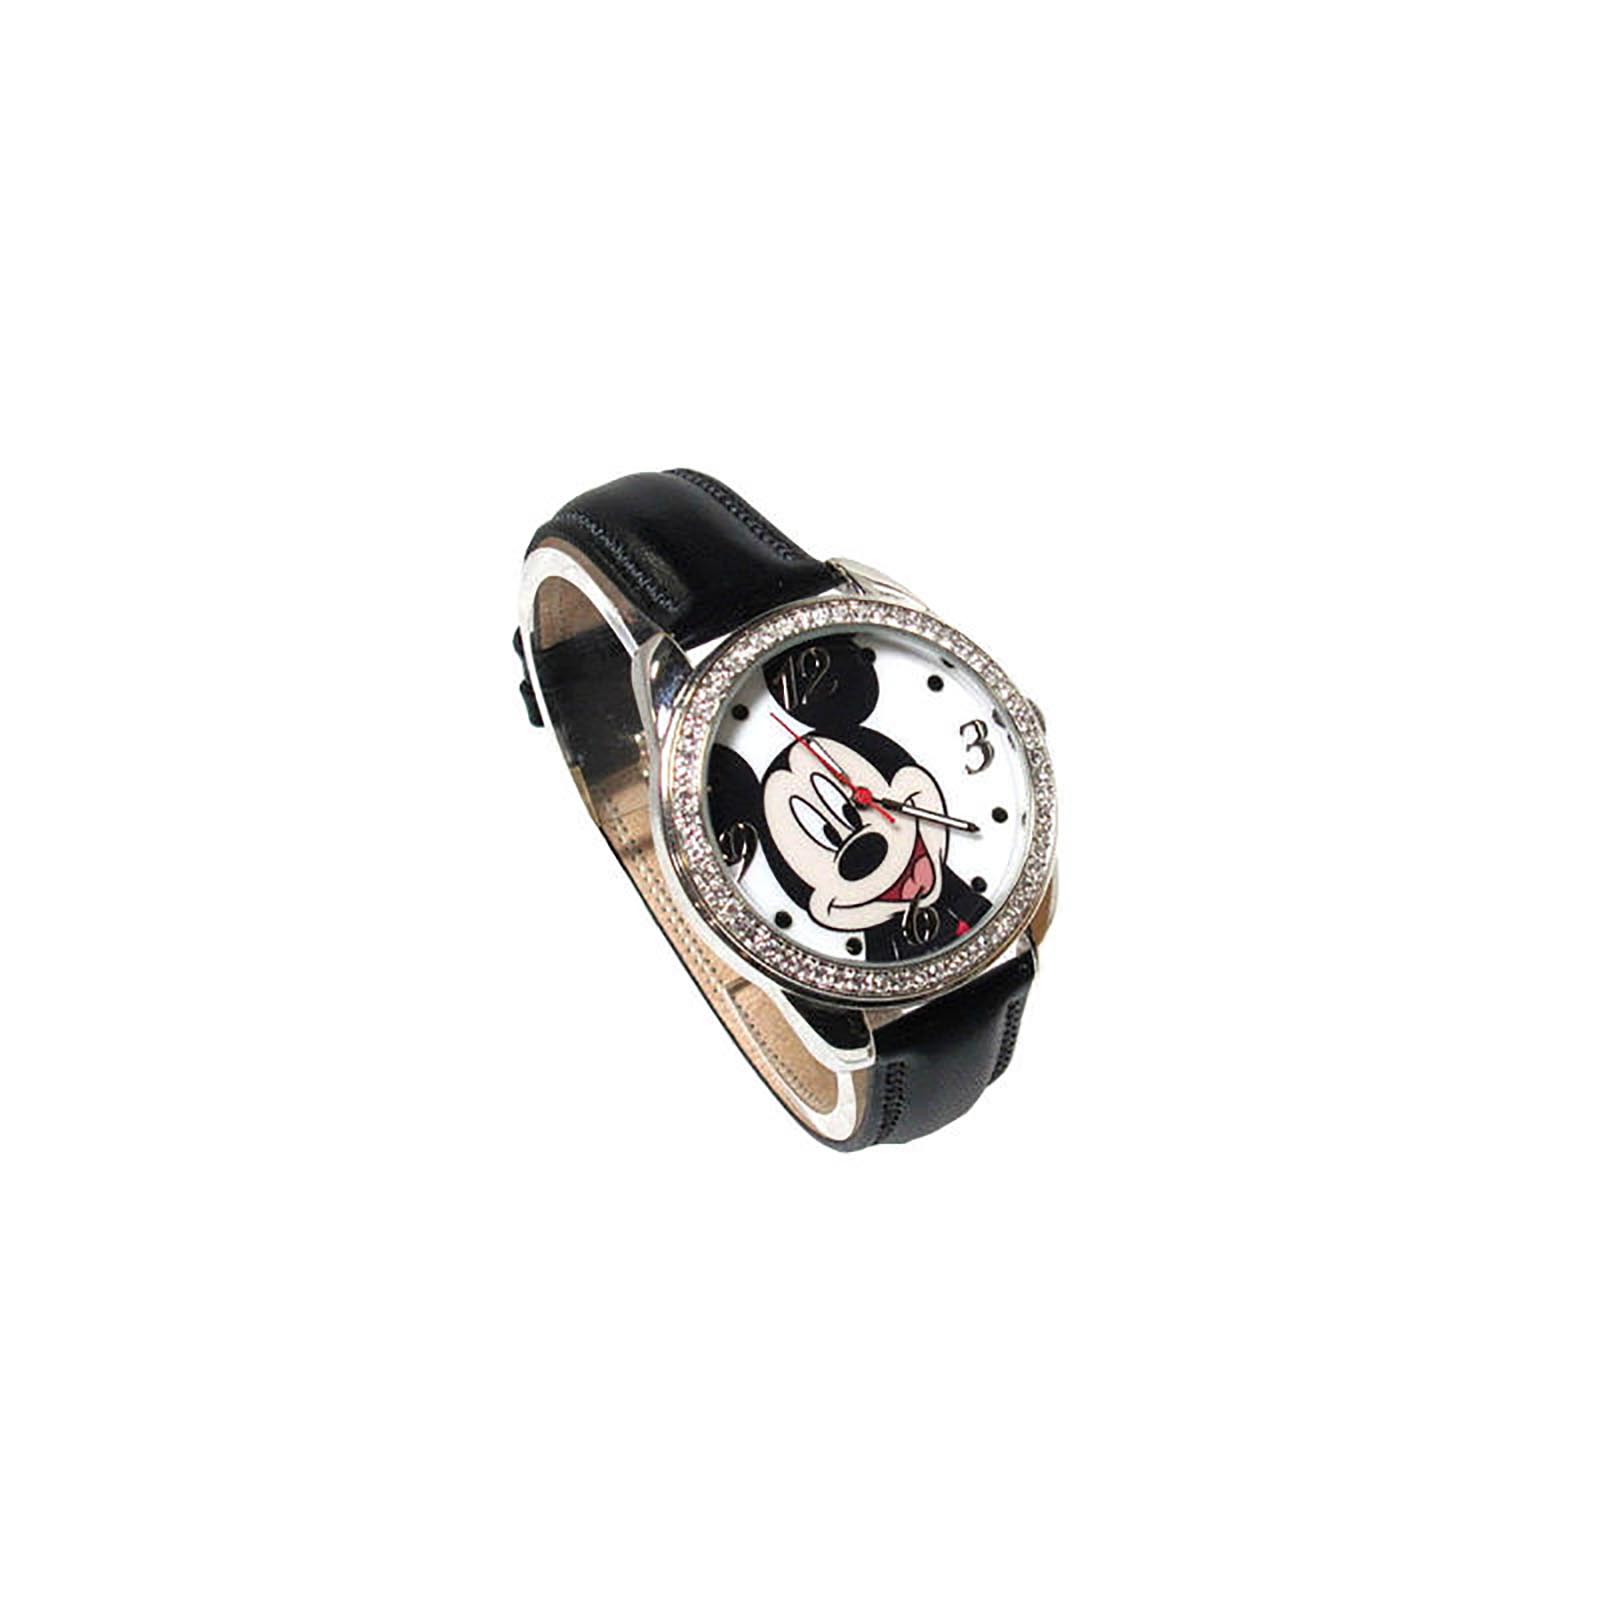 Disney MCK919 Women's Mickey Mouse Quartz Leather Watch - Black